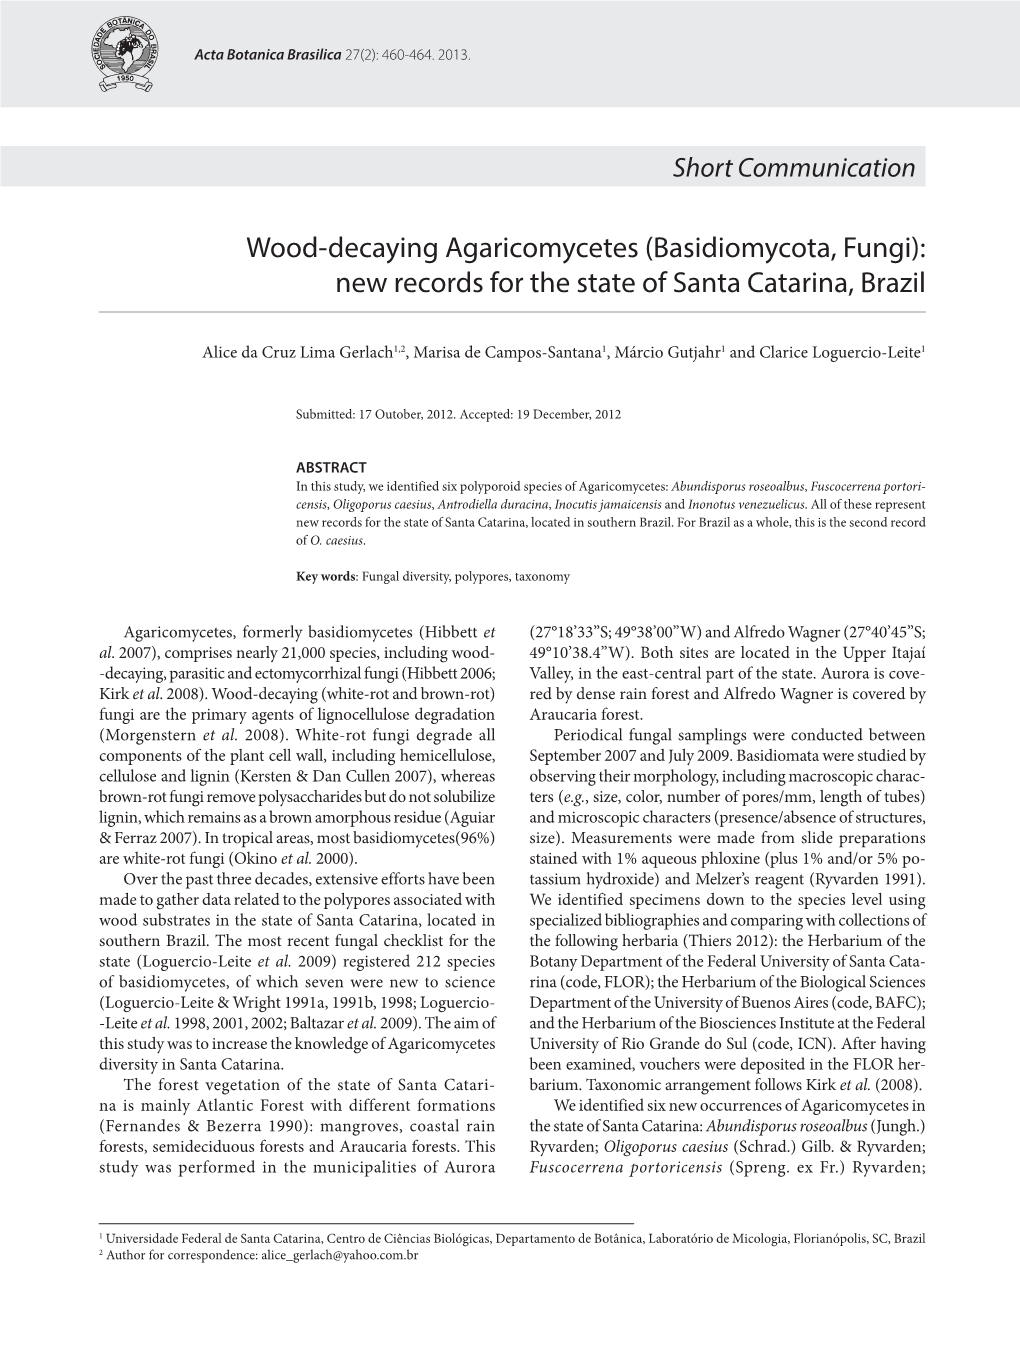 Wood-Decaying Agaricomycetes (Basidiomycota, Fungi): New Records for the State of Santa Catarina, Brazil